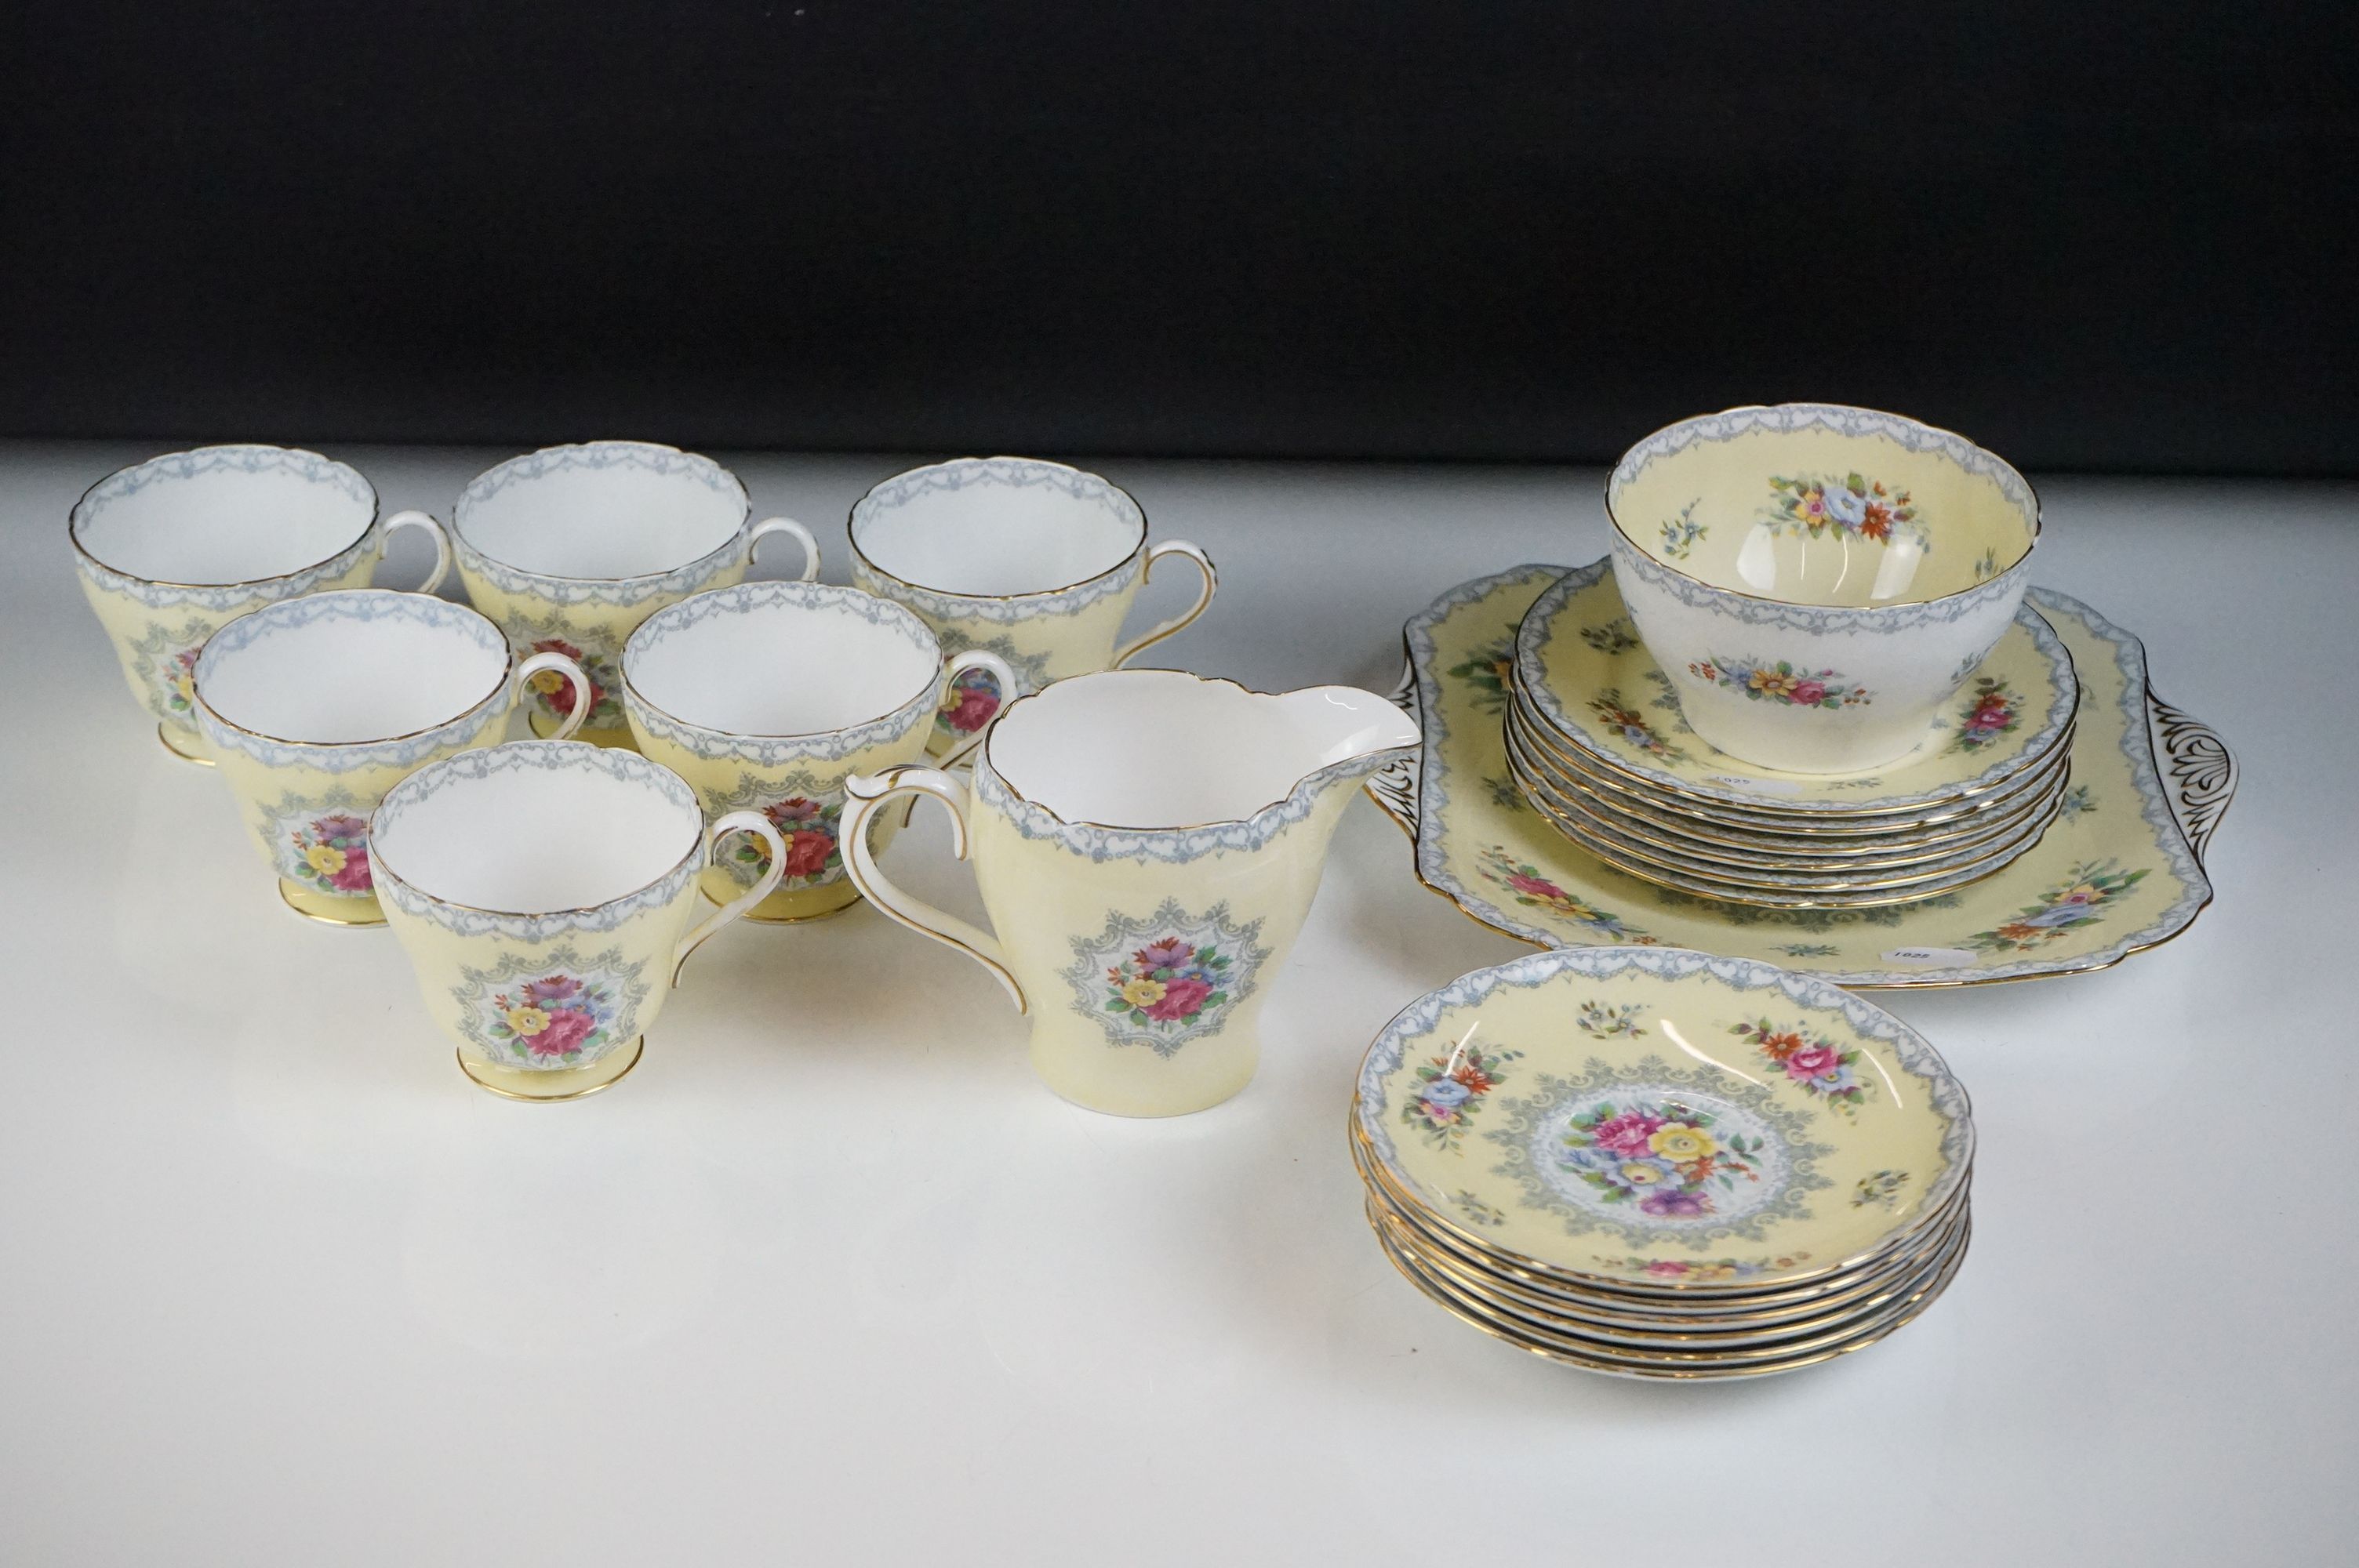 Shelley Yellow ' Crochet ' pattern tea set, no. 13643/516, comprising 6 teacups & saucers, 6 tea